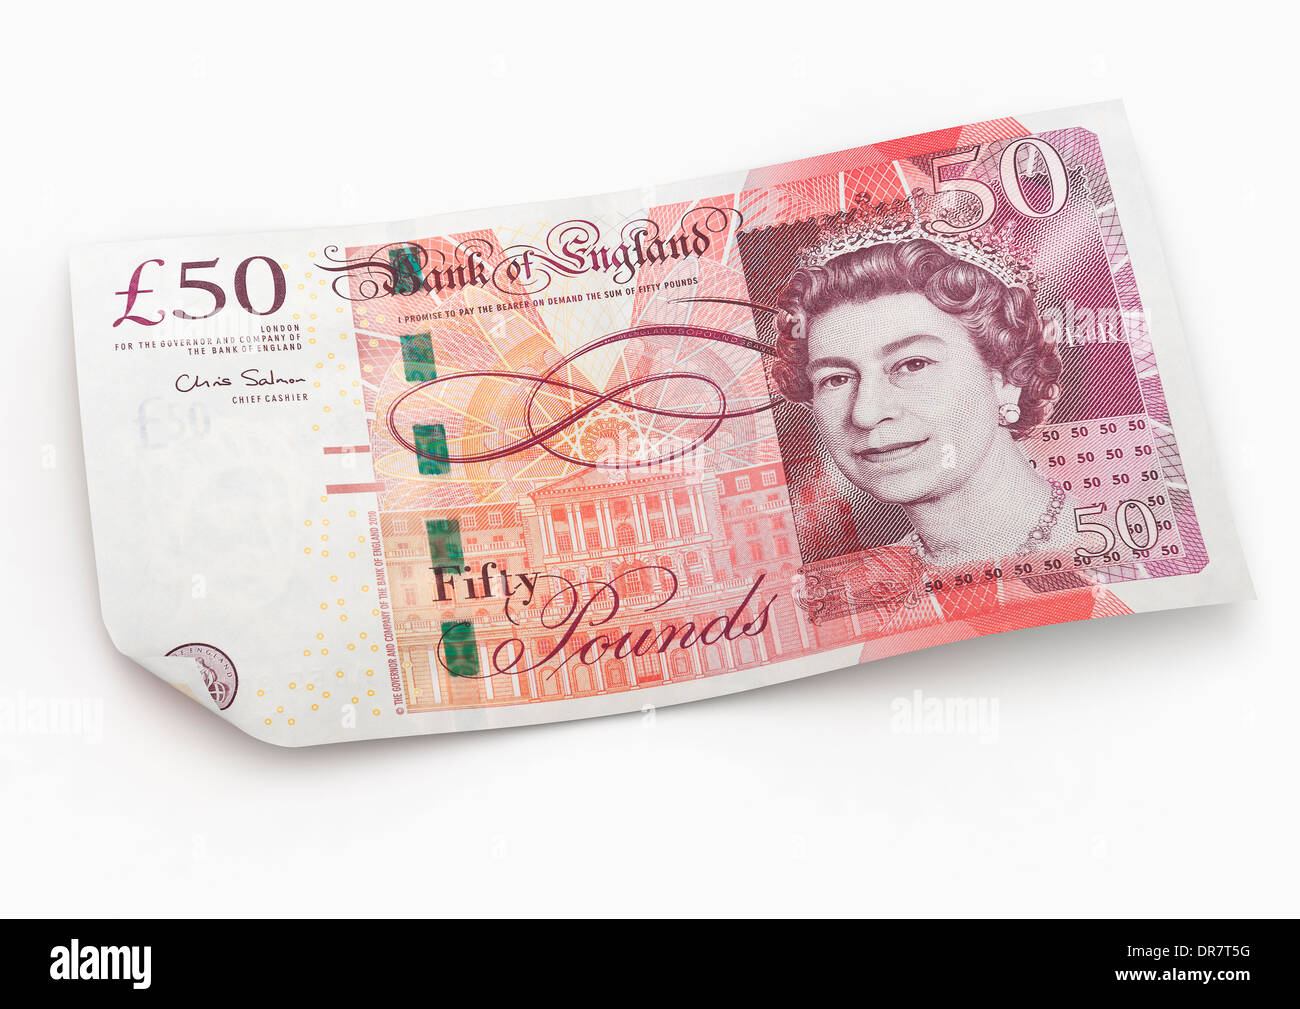 Nota 50 libras esterlinas moneda británica sobre fondo blanco. Foto de stock